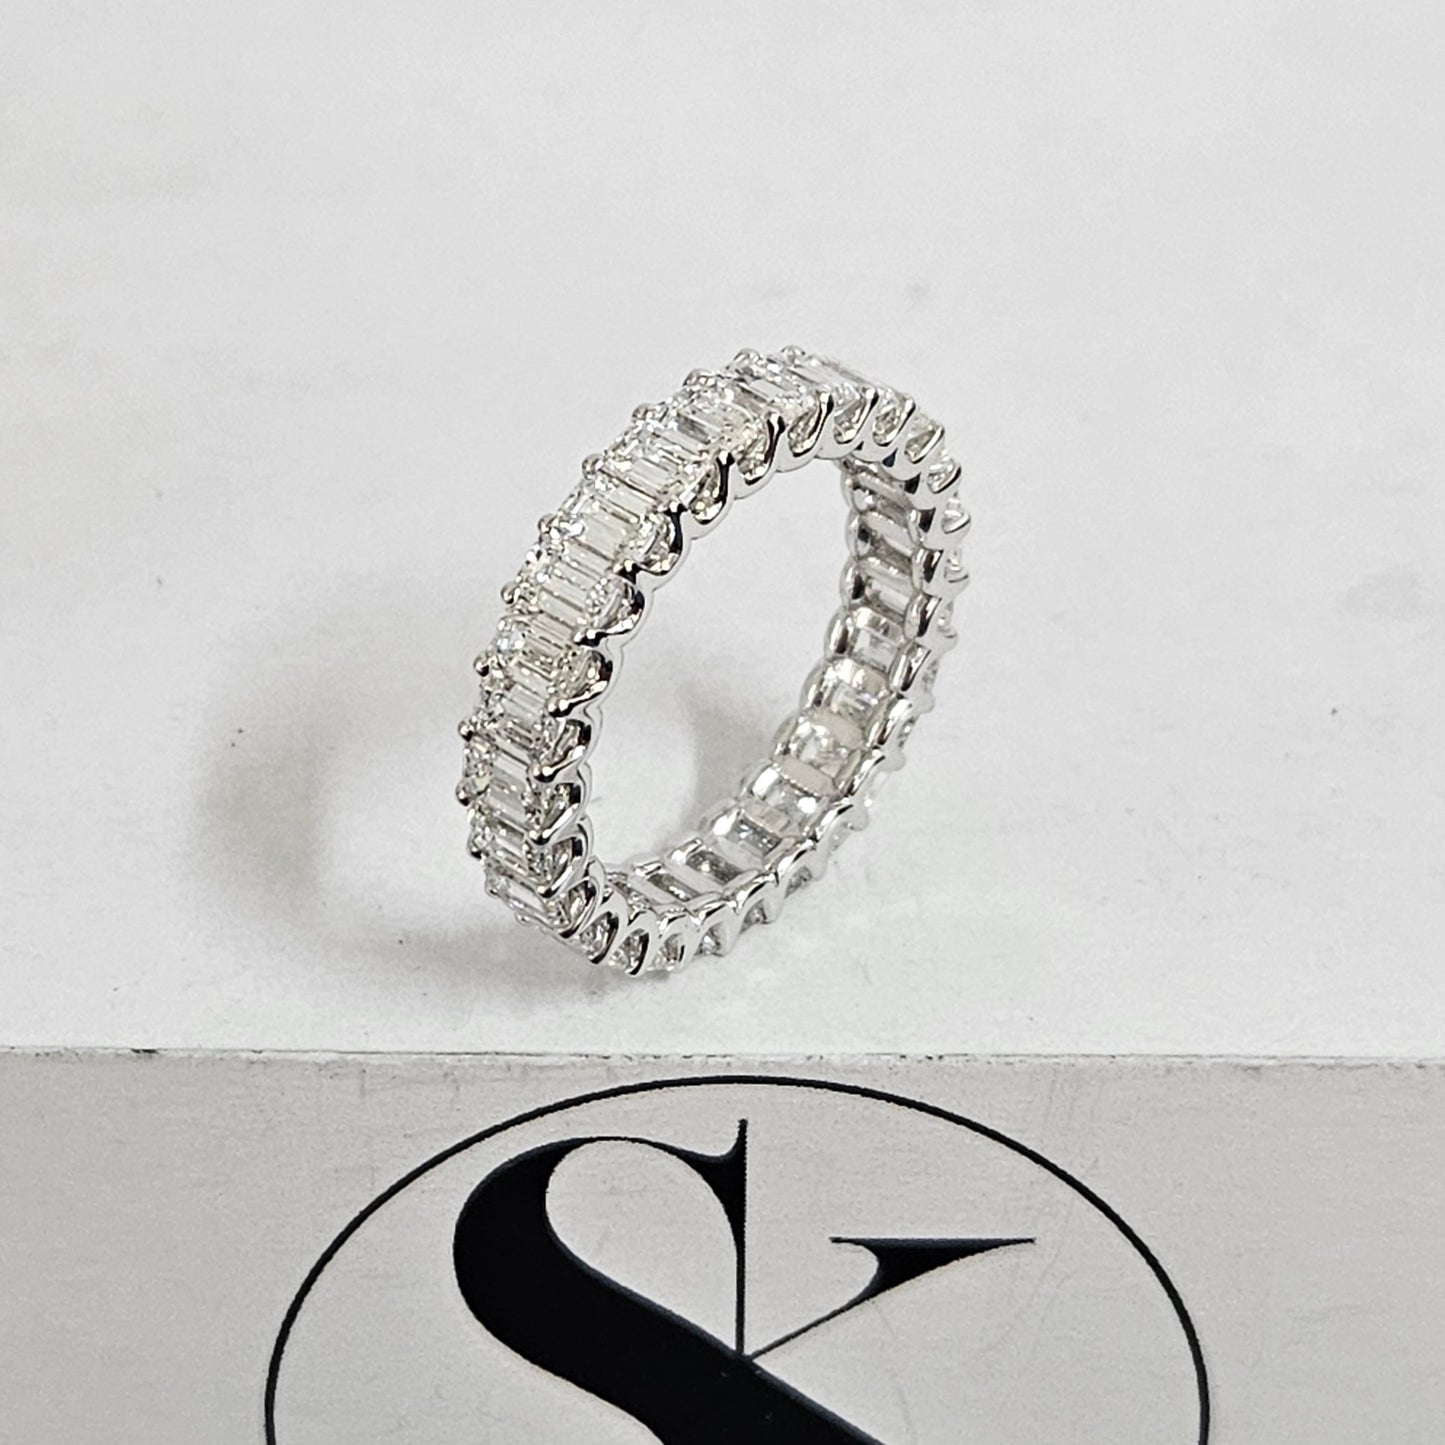 Sean's handmade custom order (Full Eternity Emerald Cut Diamond Ring)